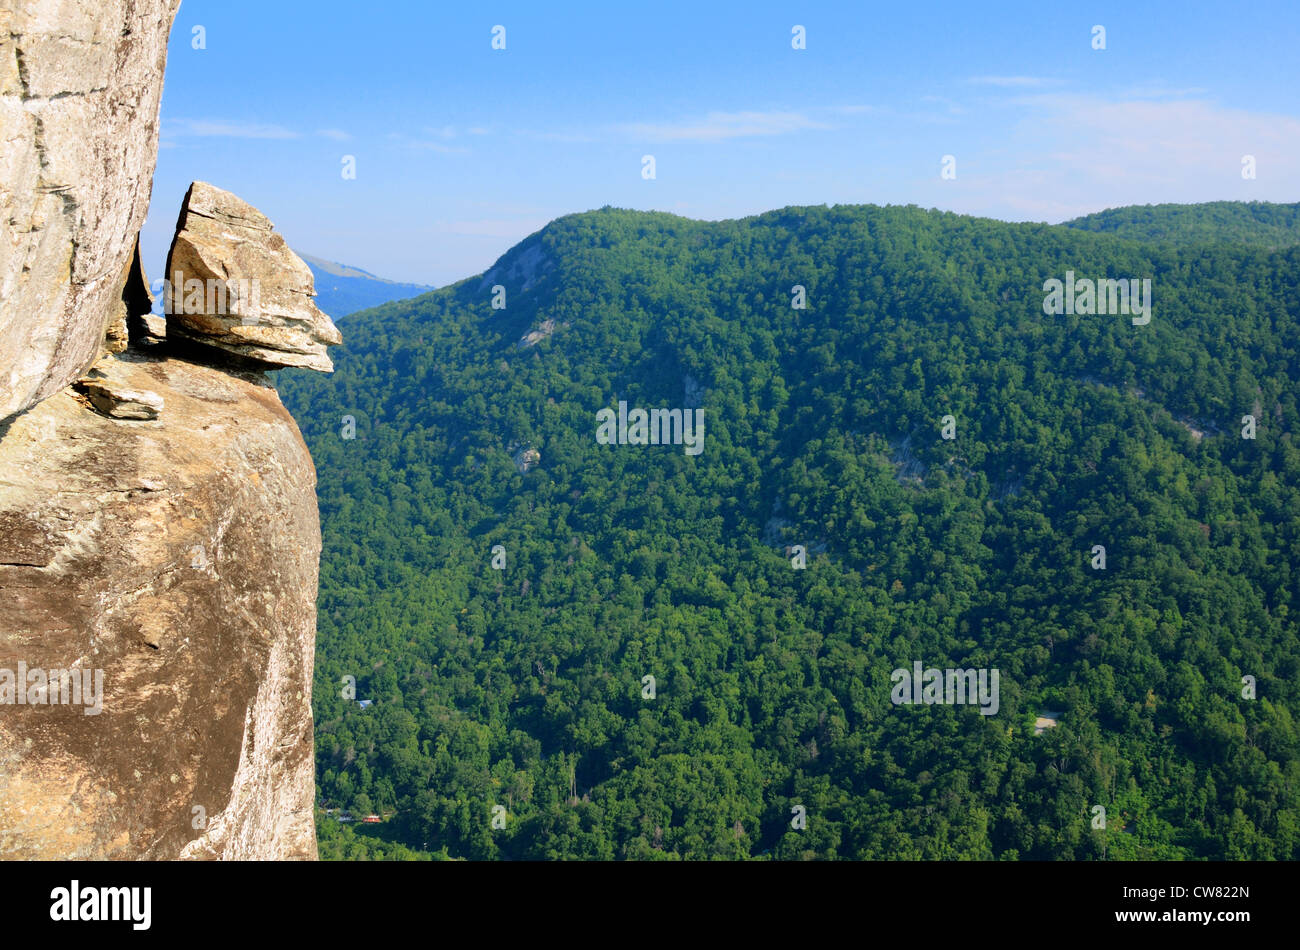 Devil's Head balancing rock at Chimney Rock Park near Asheville, North Carolina, USA. Stock Photo